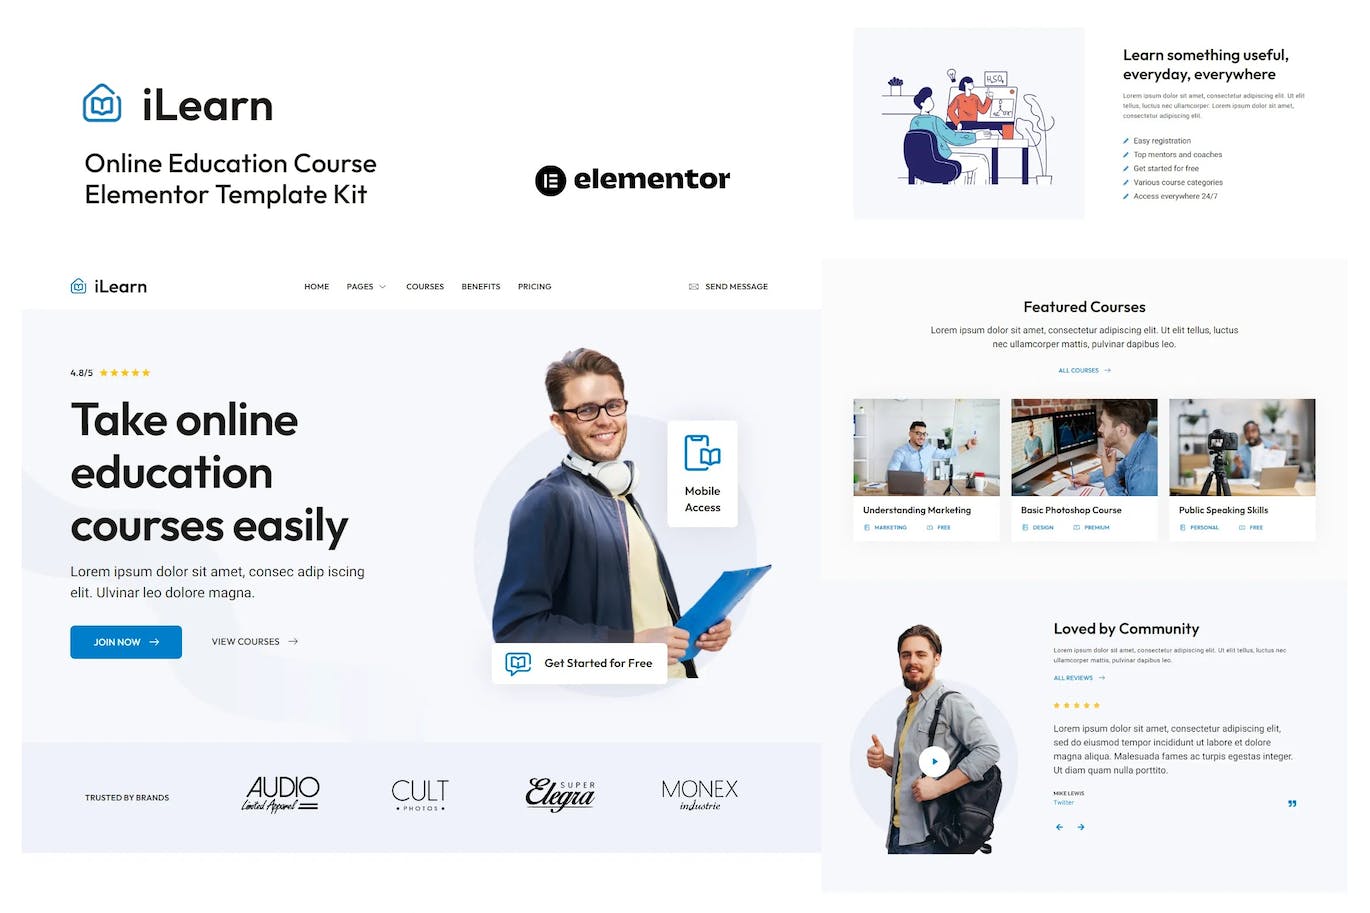 iLearn - Online Education Course Elementor Template Kit